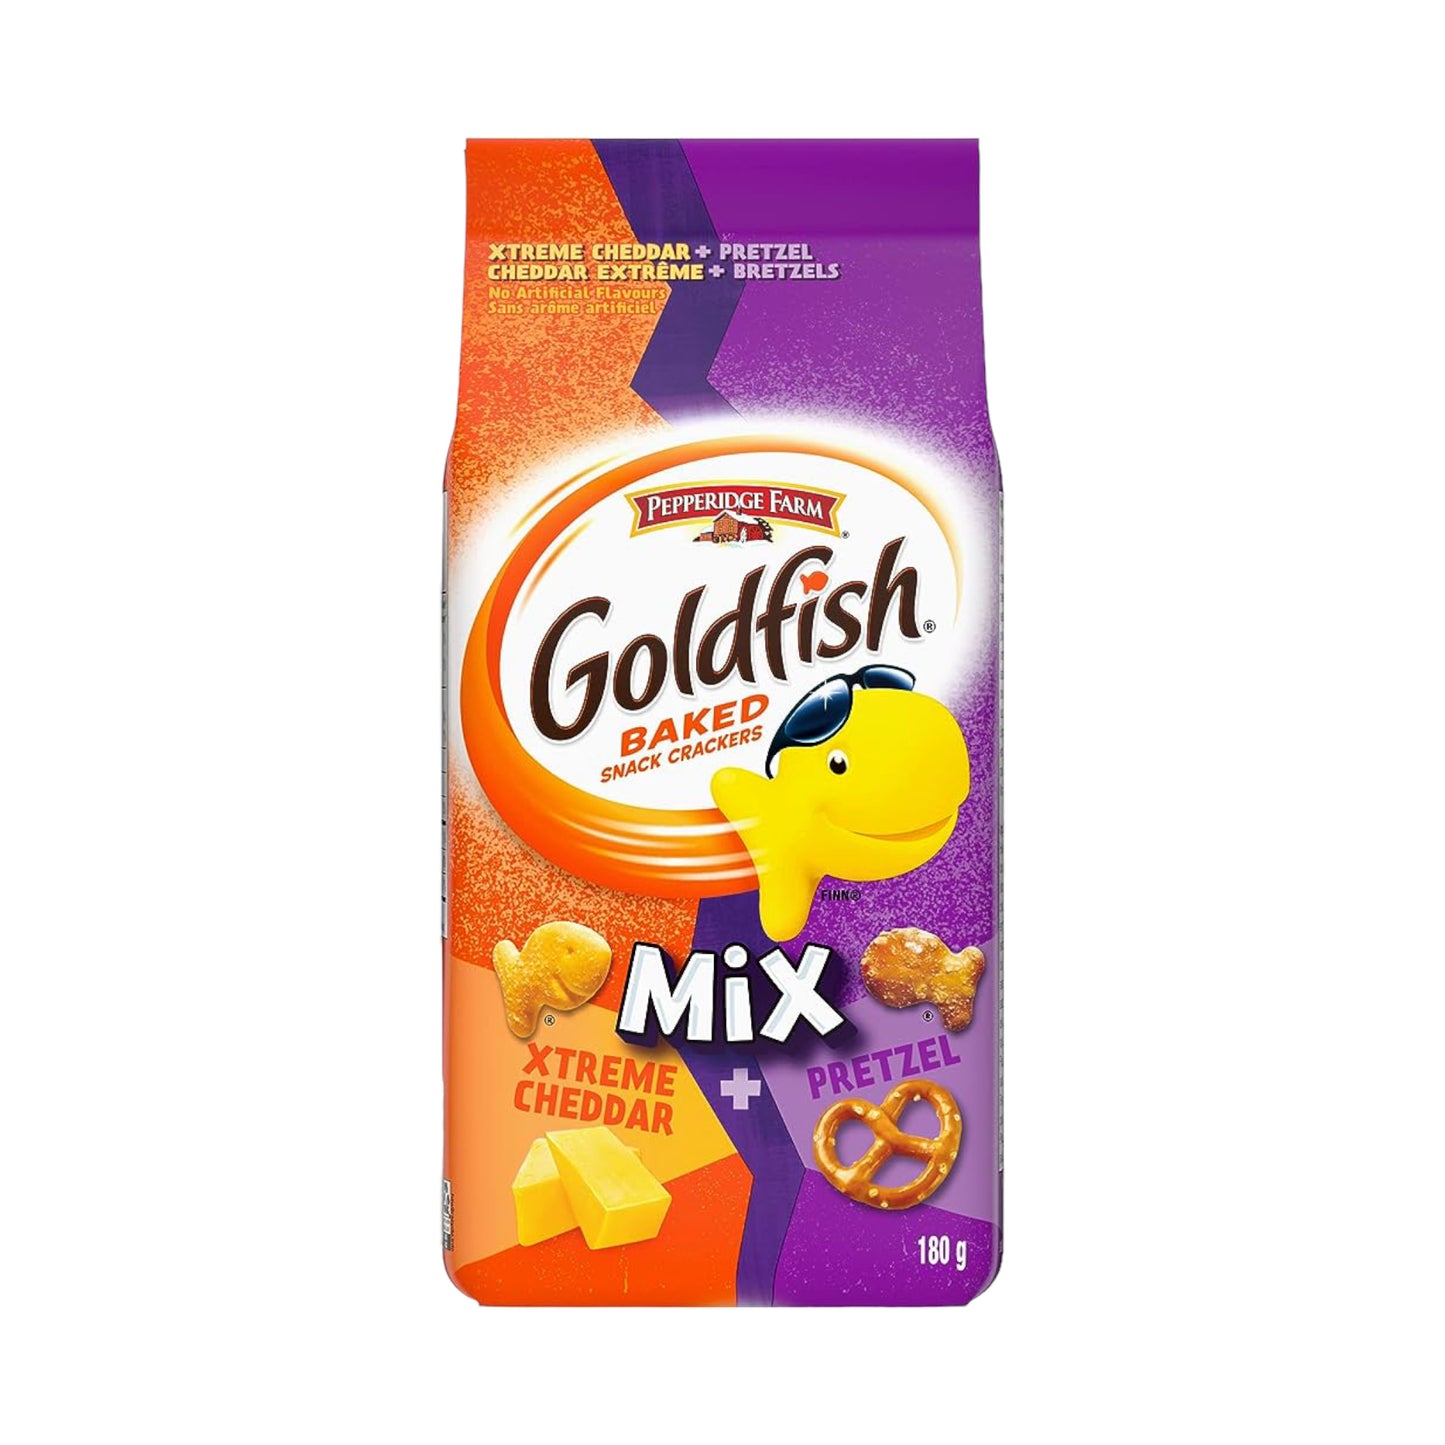 Goldfish Mix - Xtreme Cheddar and Pretzel - 180g[Canadian]